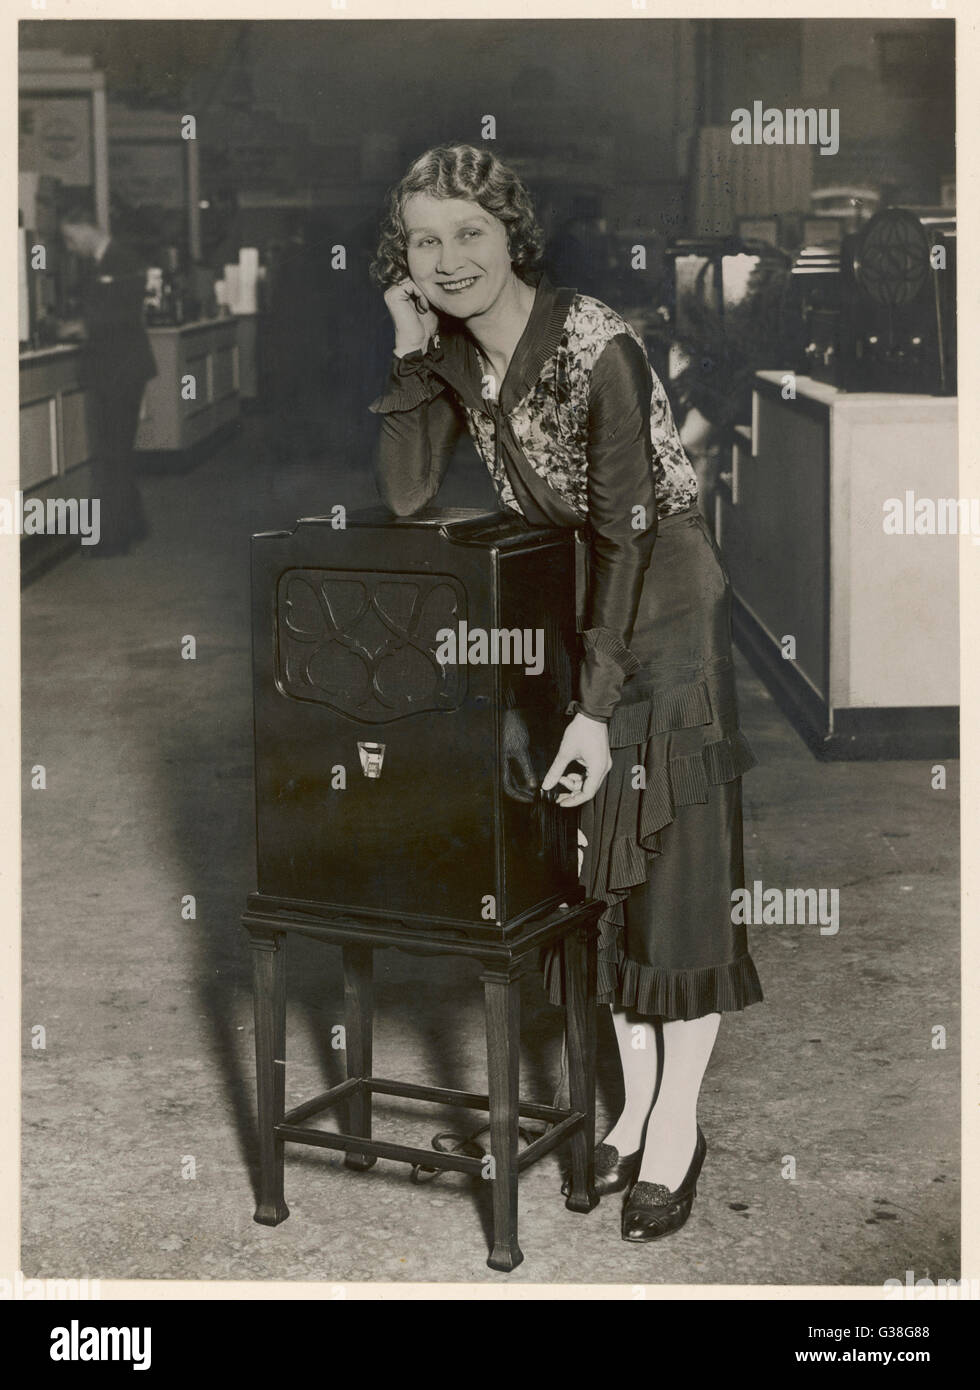 AMPHION RADIO, 1931 Stock Photo